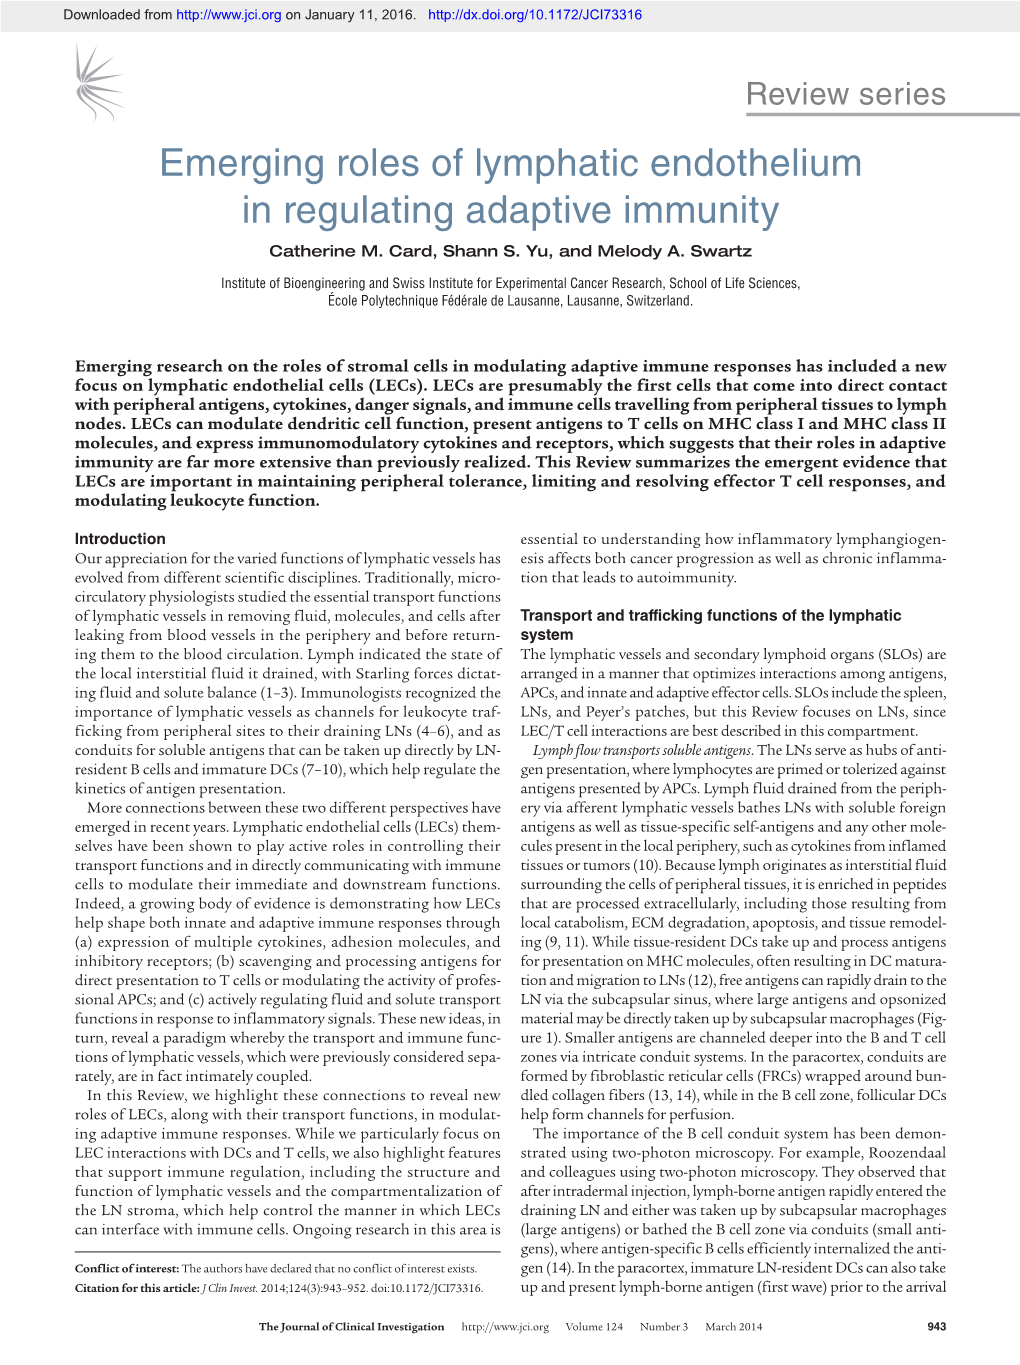 Emerging Roles of Lymphatic Endothelium in Regulating Adaptive Immunity Catherine M